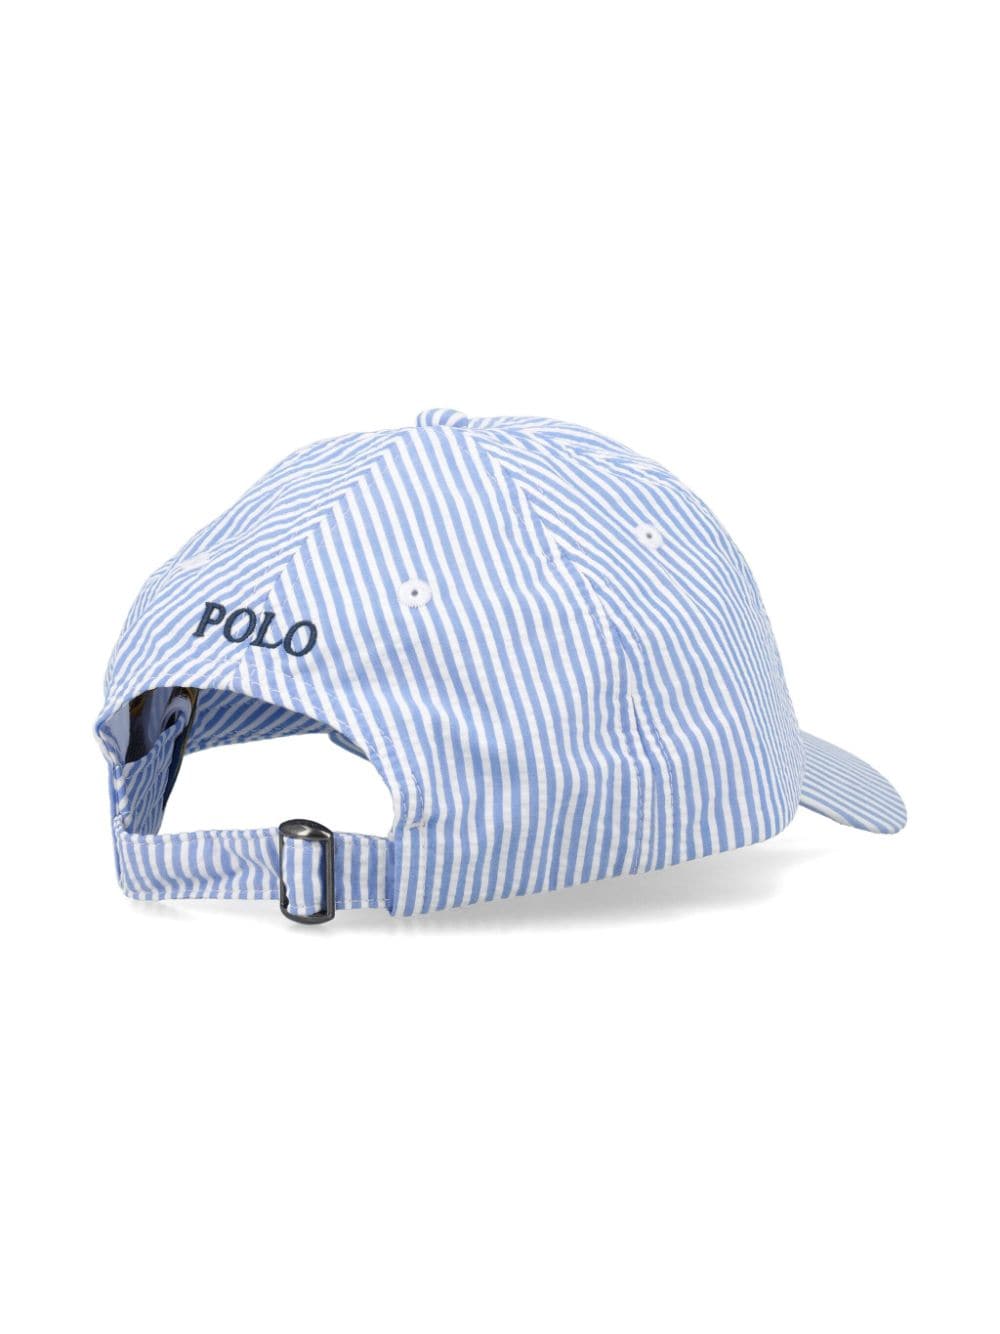 Polo Ralph Lauren Polo Pony cotton cap - Blauw